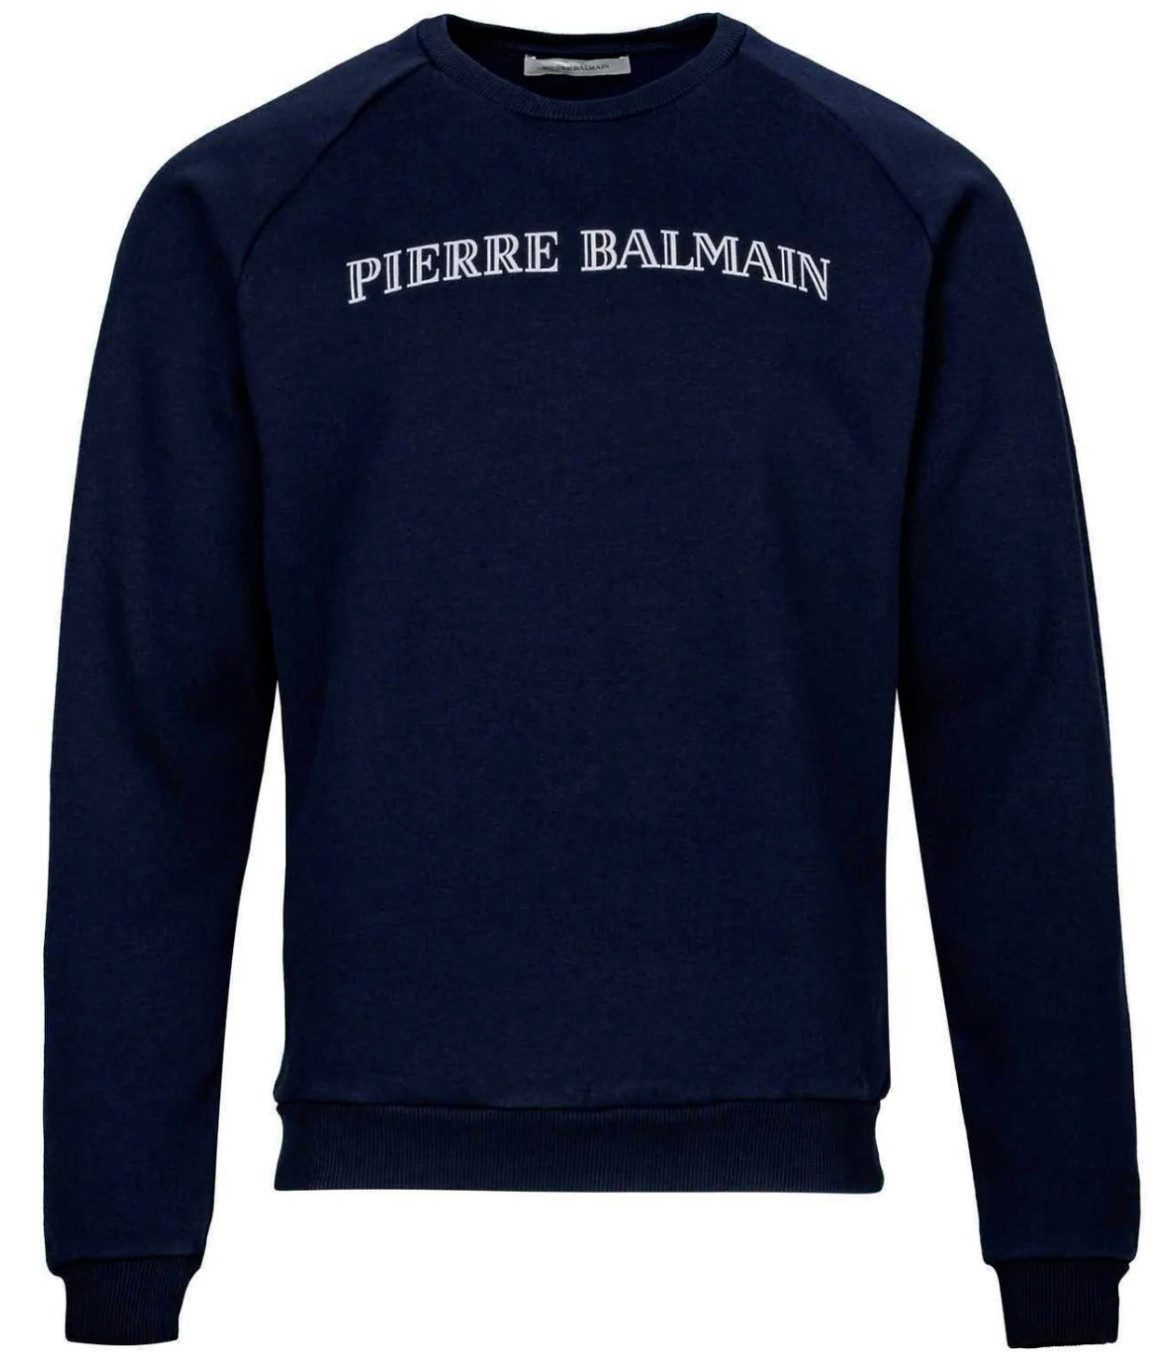 Balmain Paris Sweatshirt Pierre Balmain Sweatshirt Logo Sweater Jumper Pulli Pullover